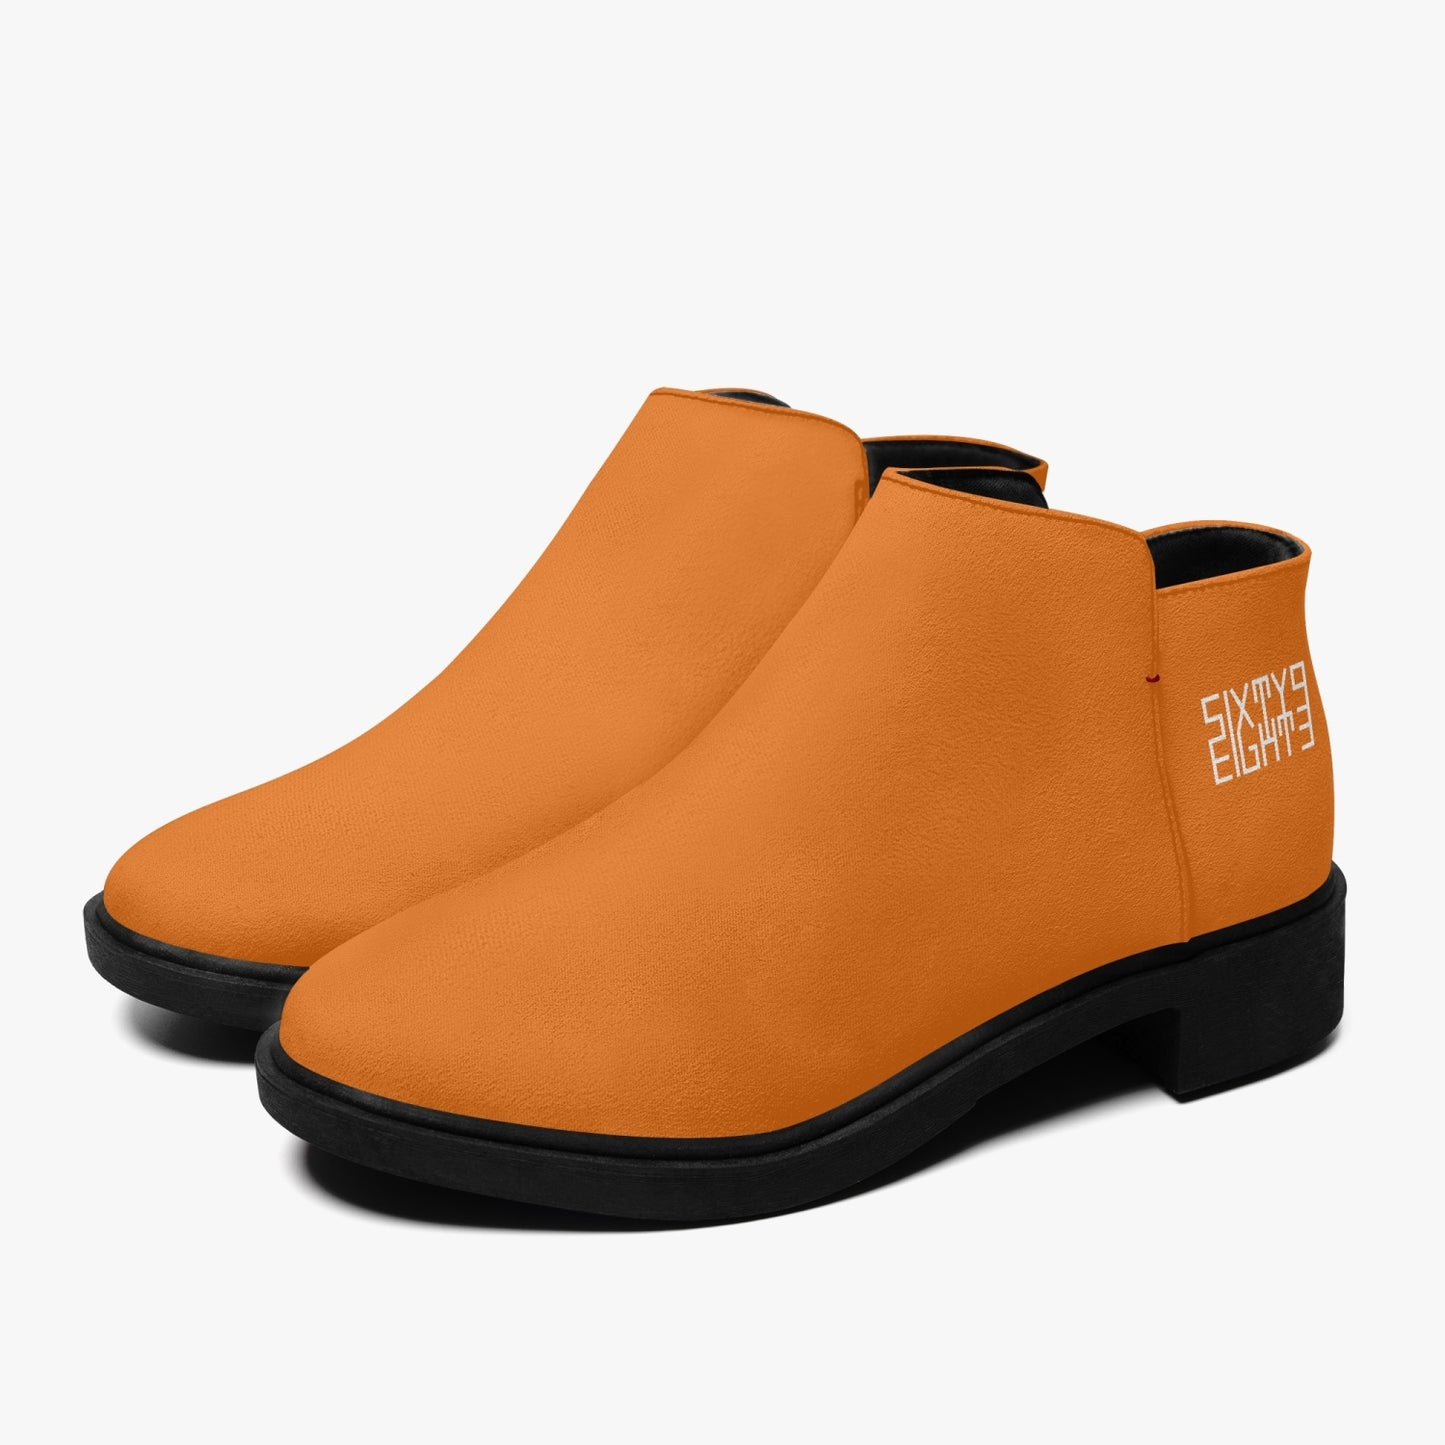 Sixty Eight 93 Logo White Orange Suede Zipper Boots